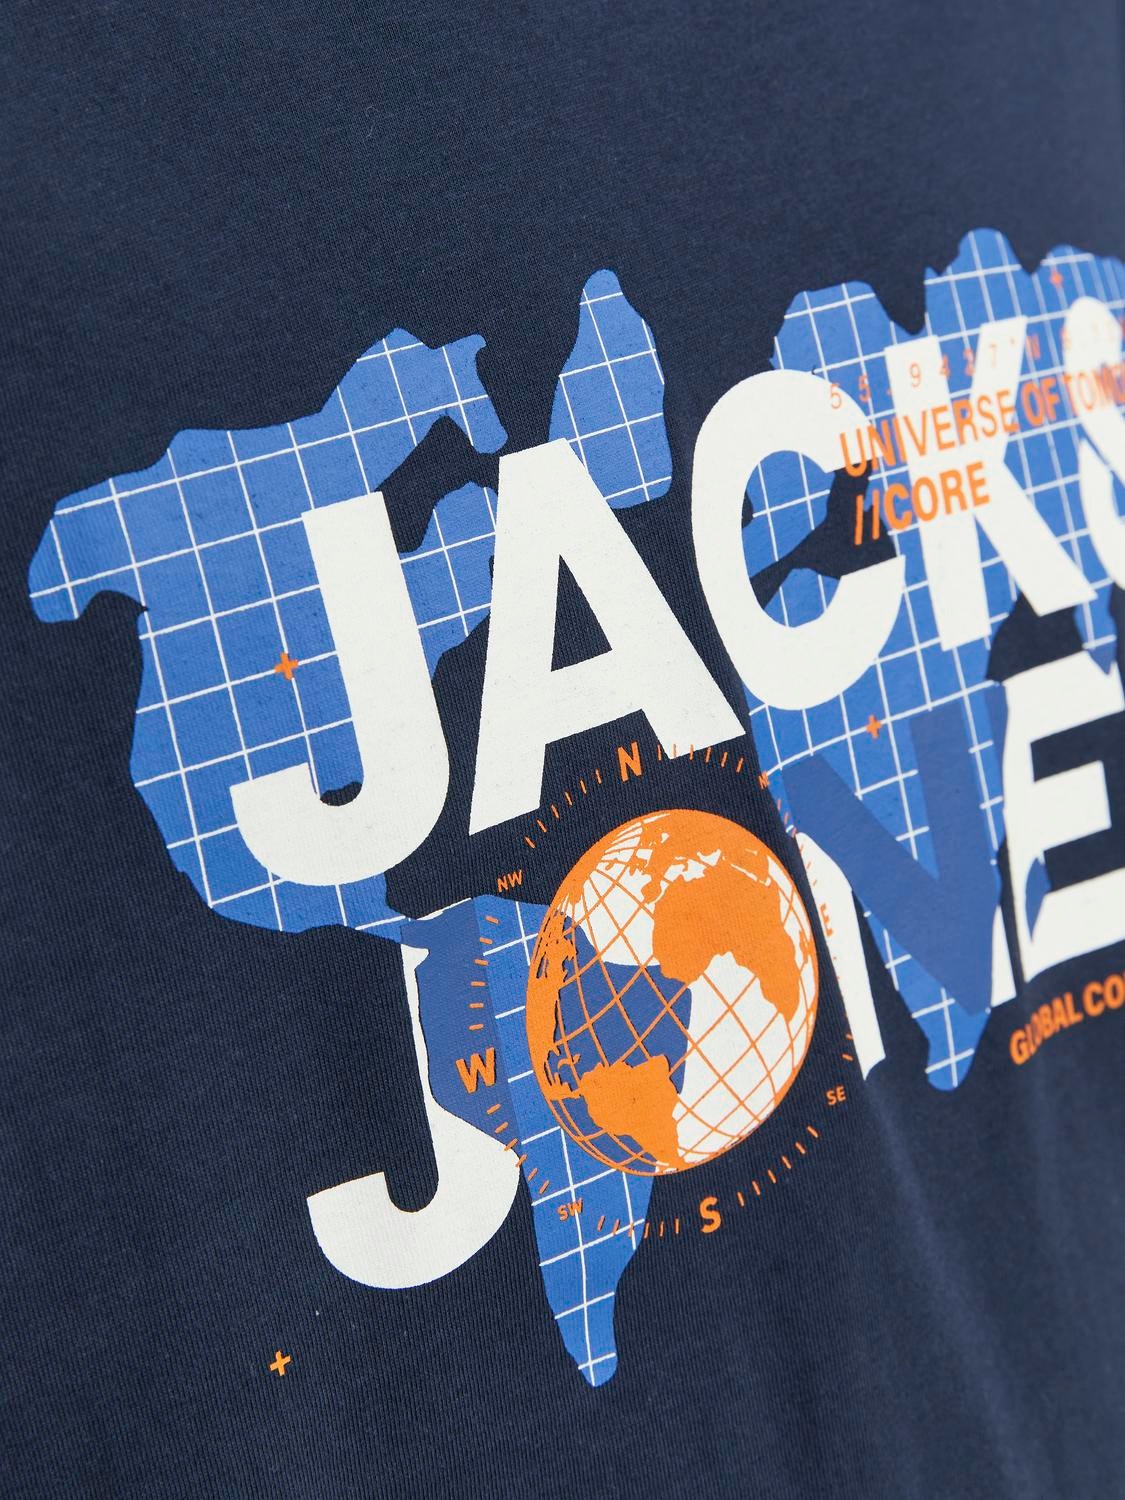 Jack & Jones Καλοκαιρινό μπλουζάκι -Navy Blazer - 12240276